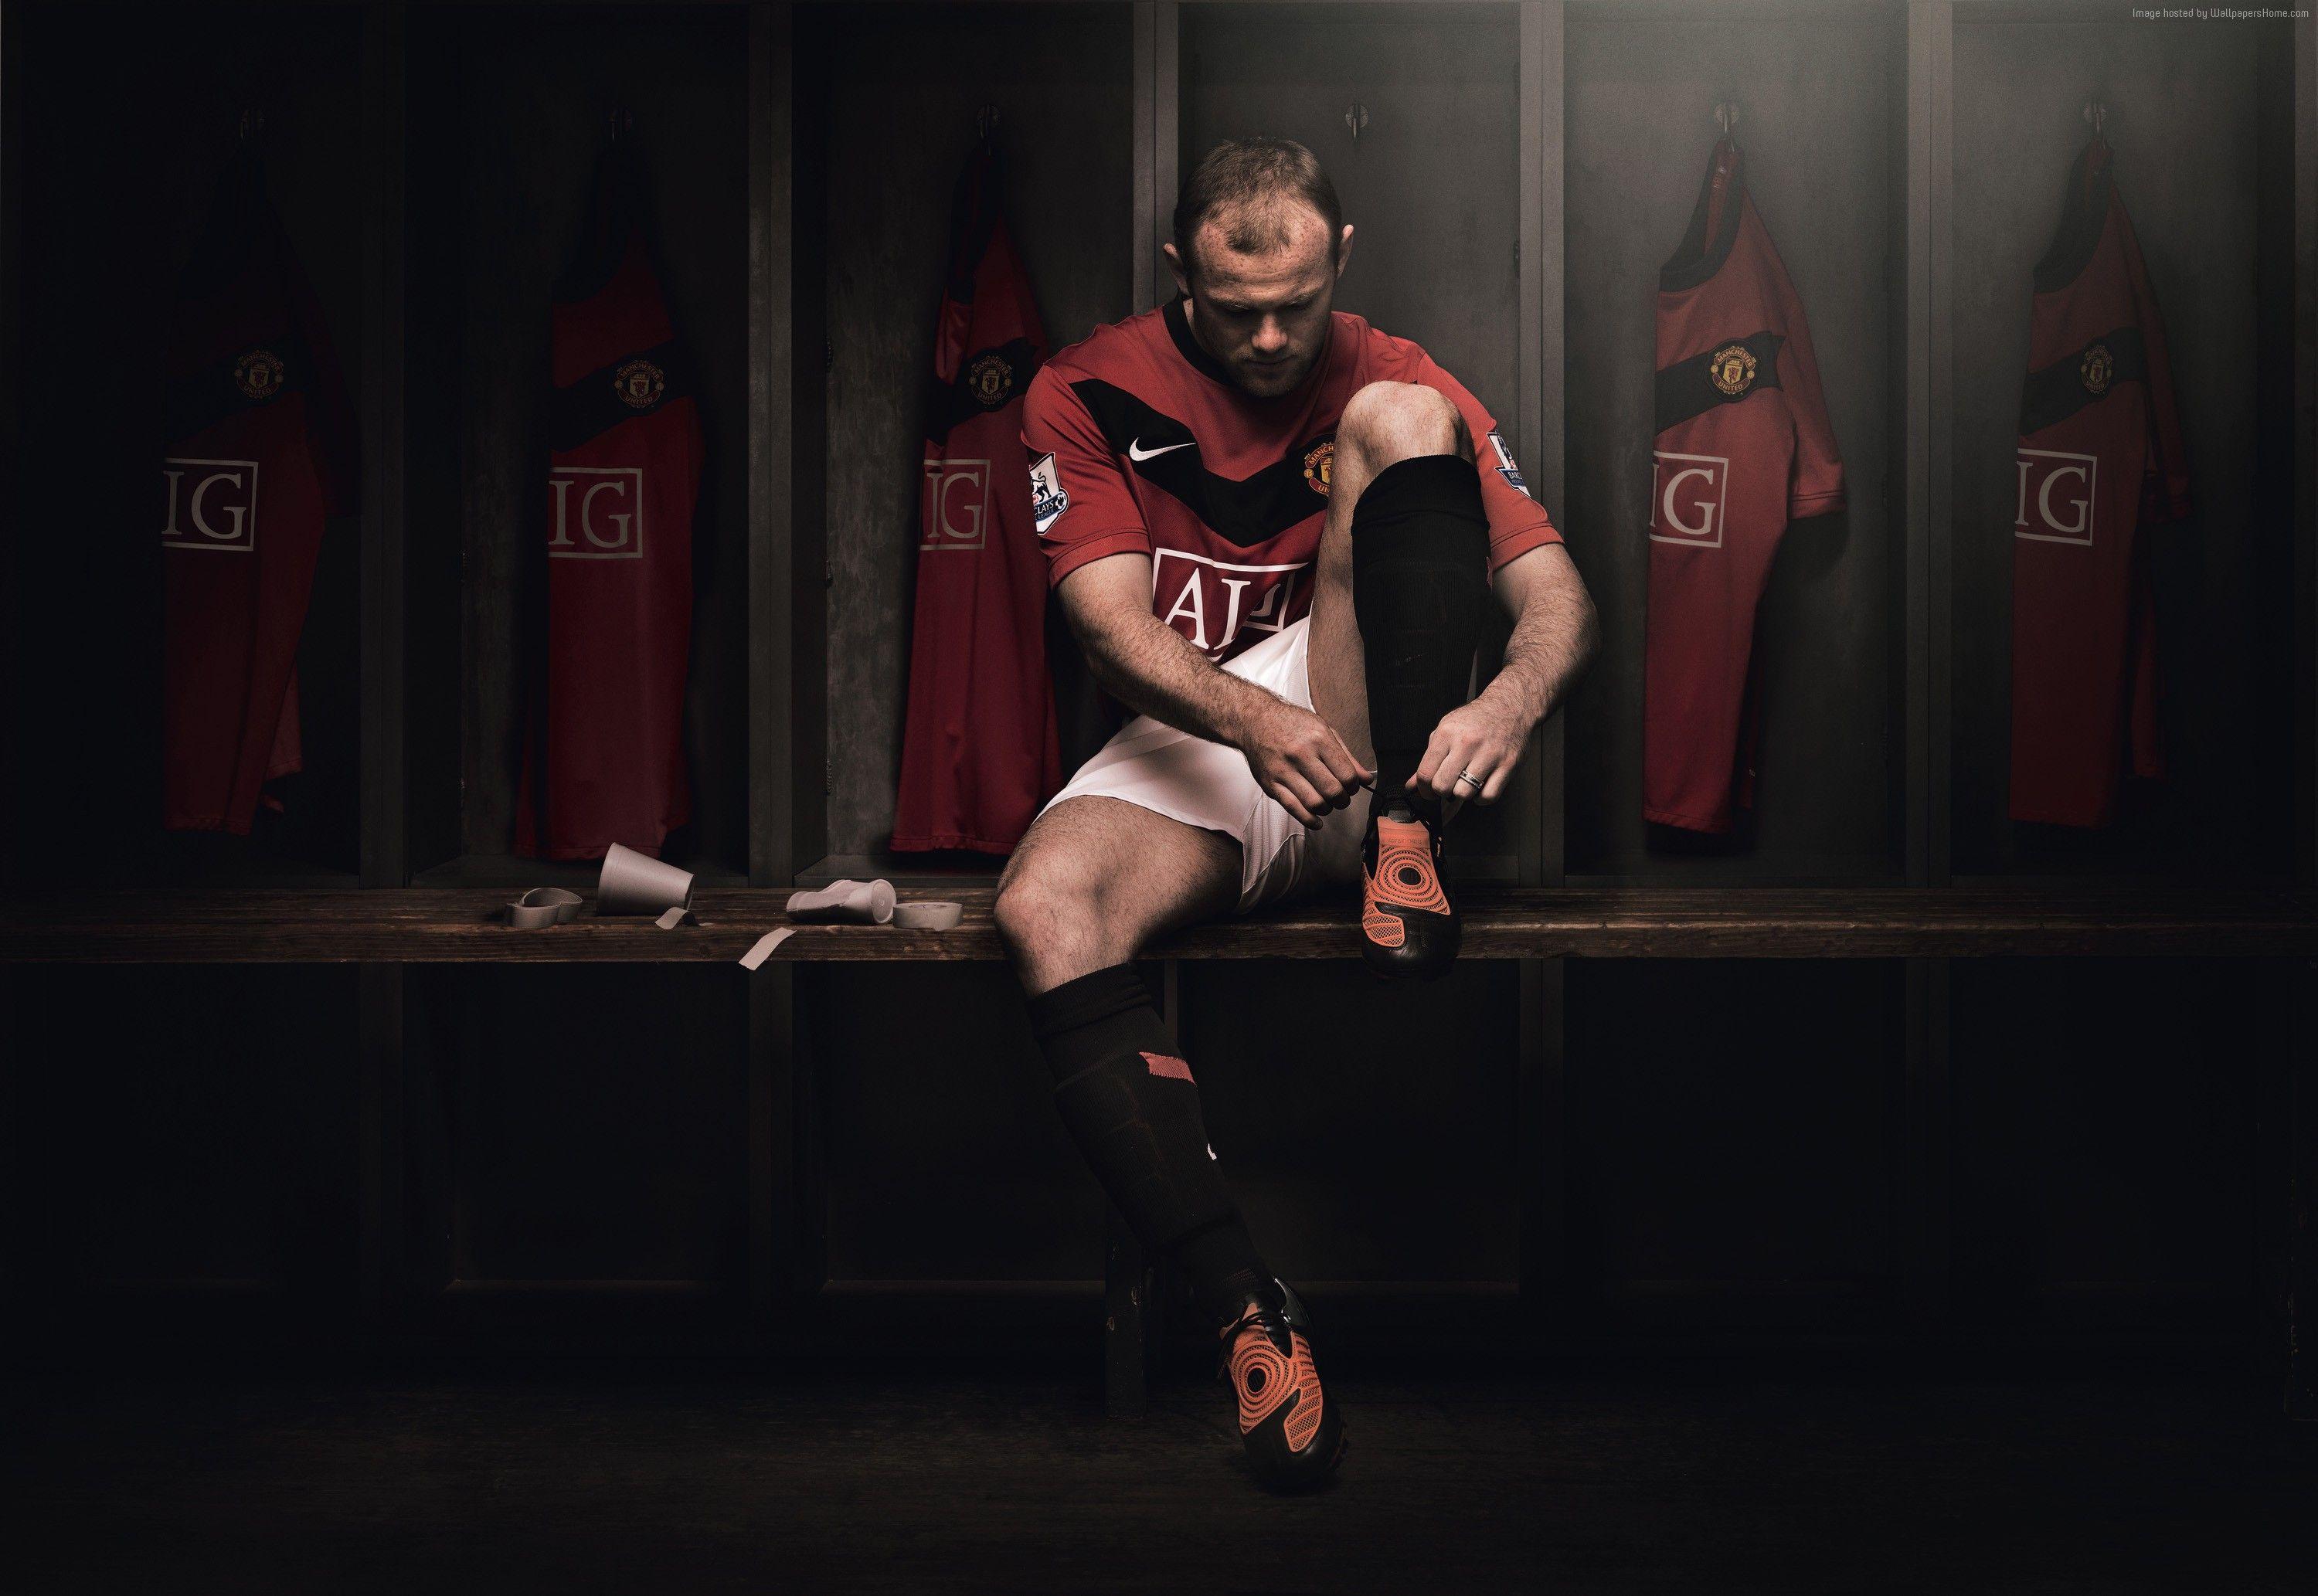 Wallpaper Football, Wayne Rooney, The best football players